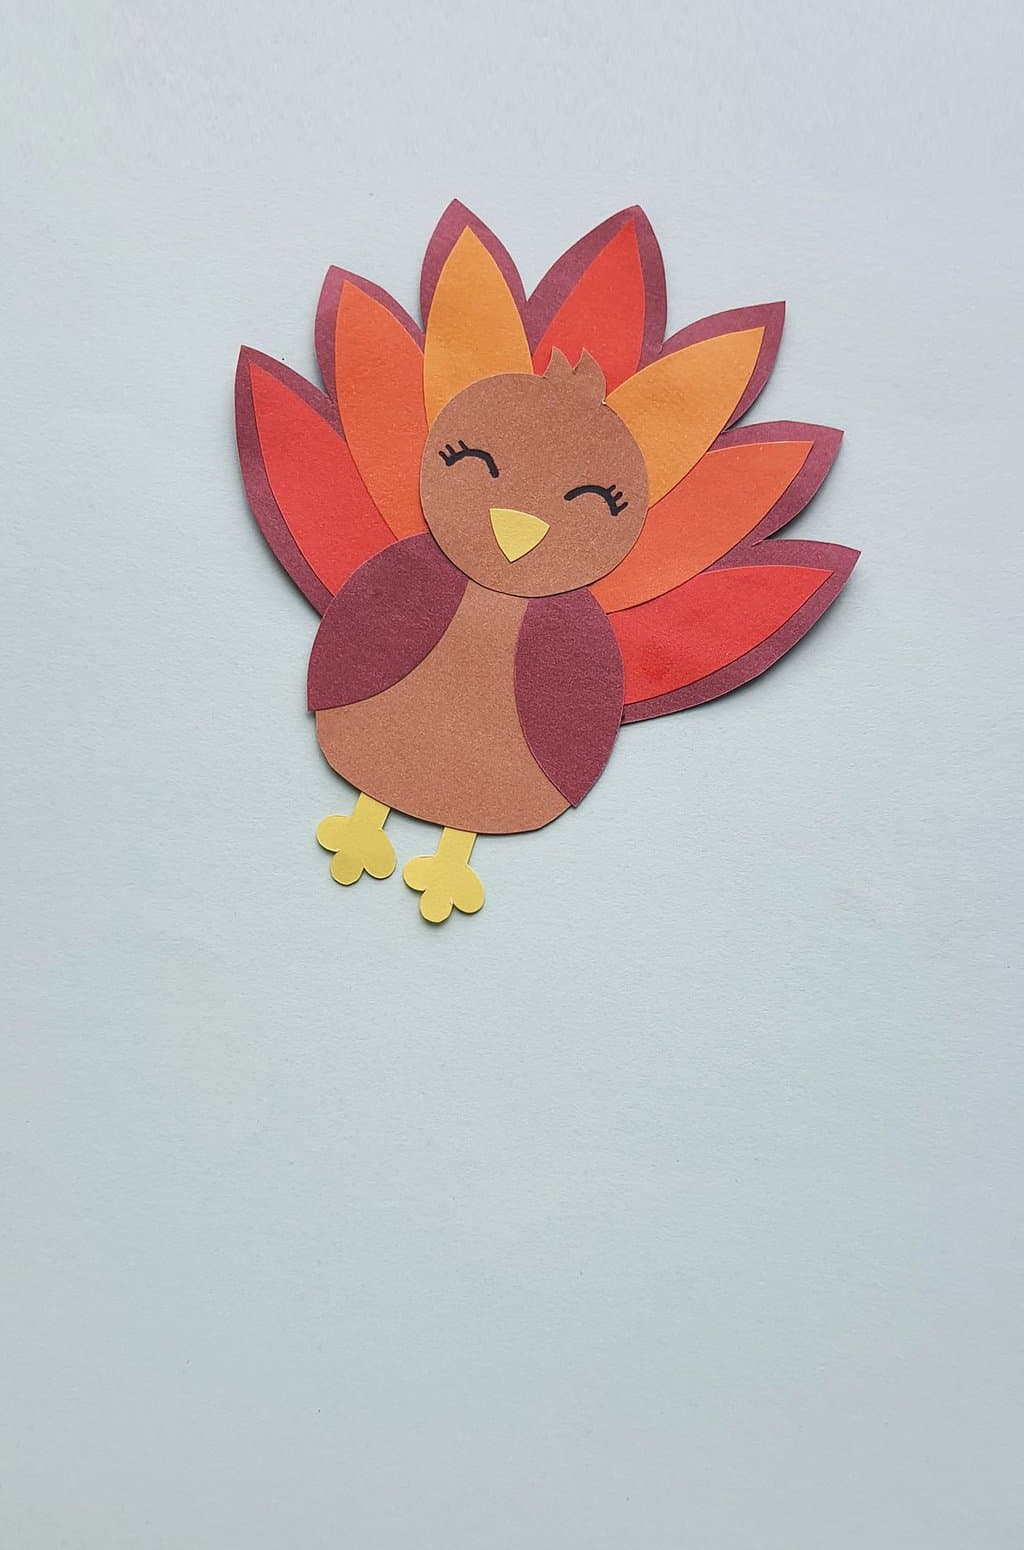 Turkey Craft for Thanksgiving